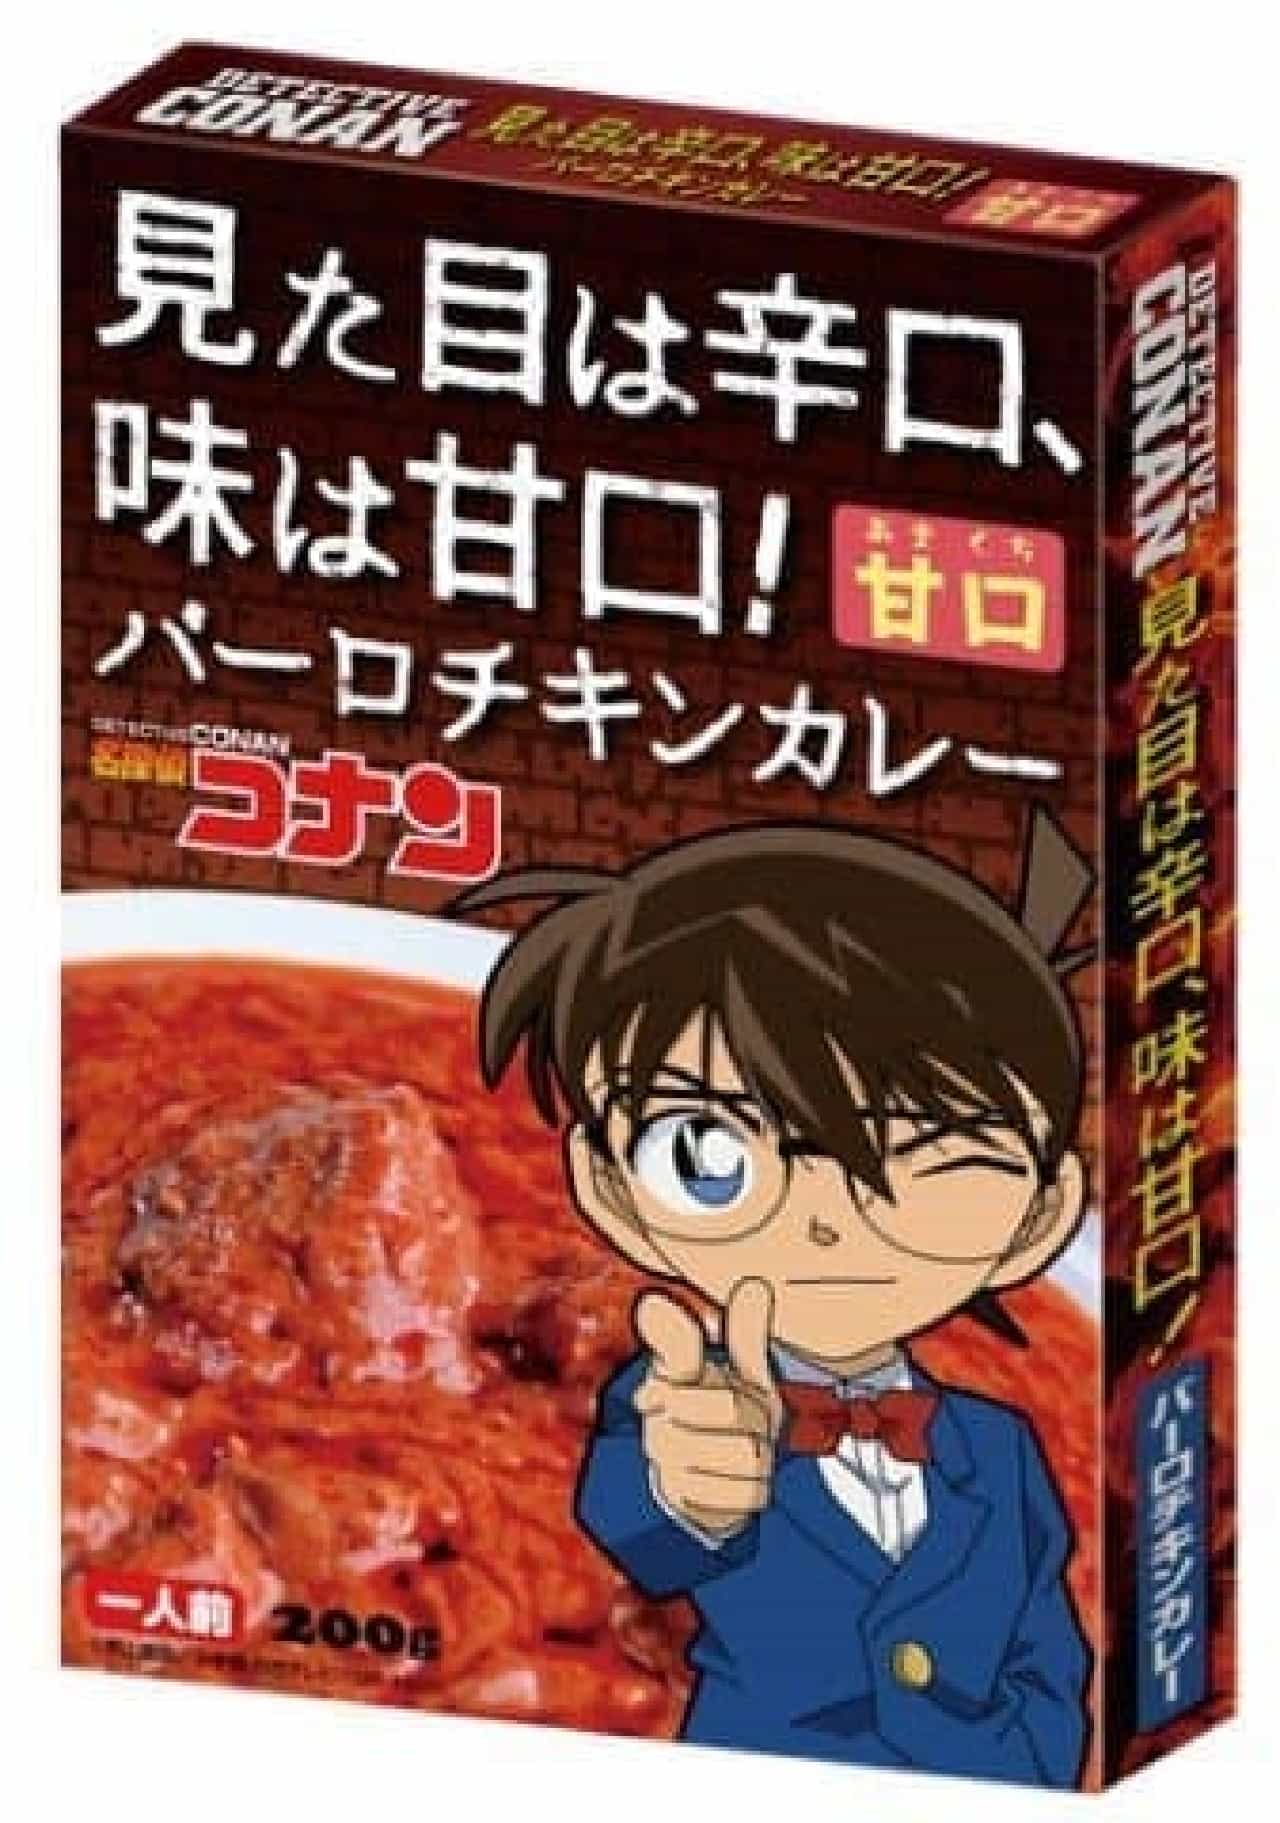 Conan Edogawa's "Barro Chicken Curry"